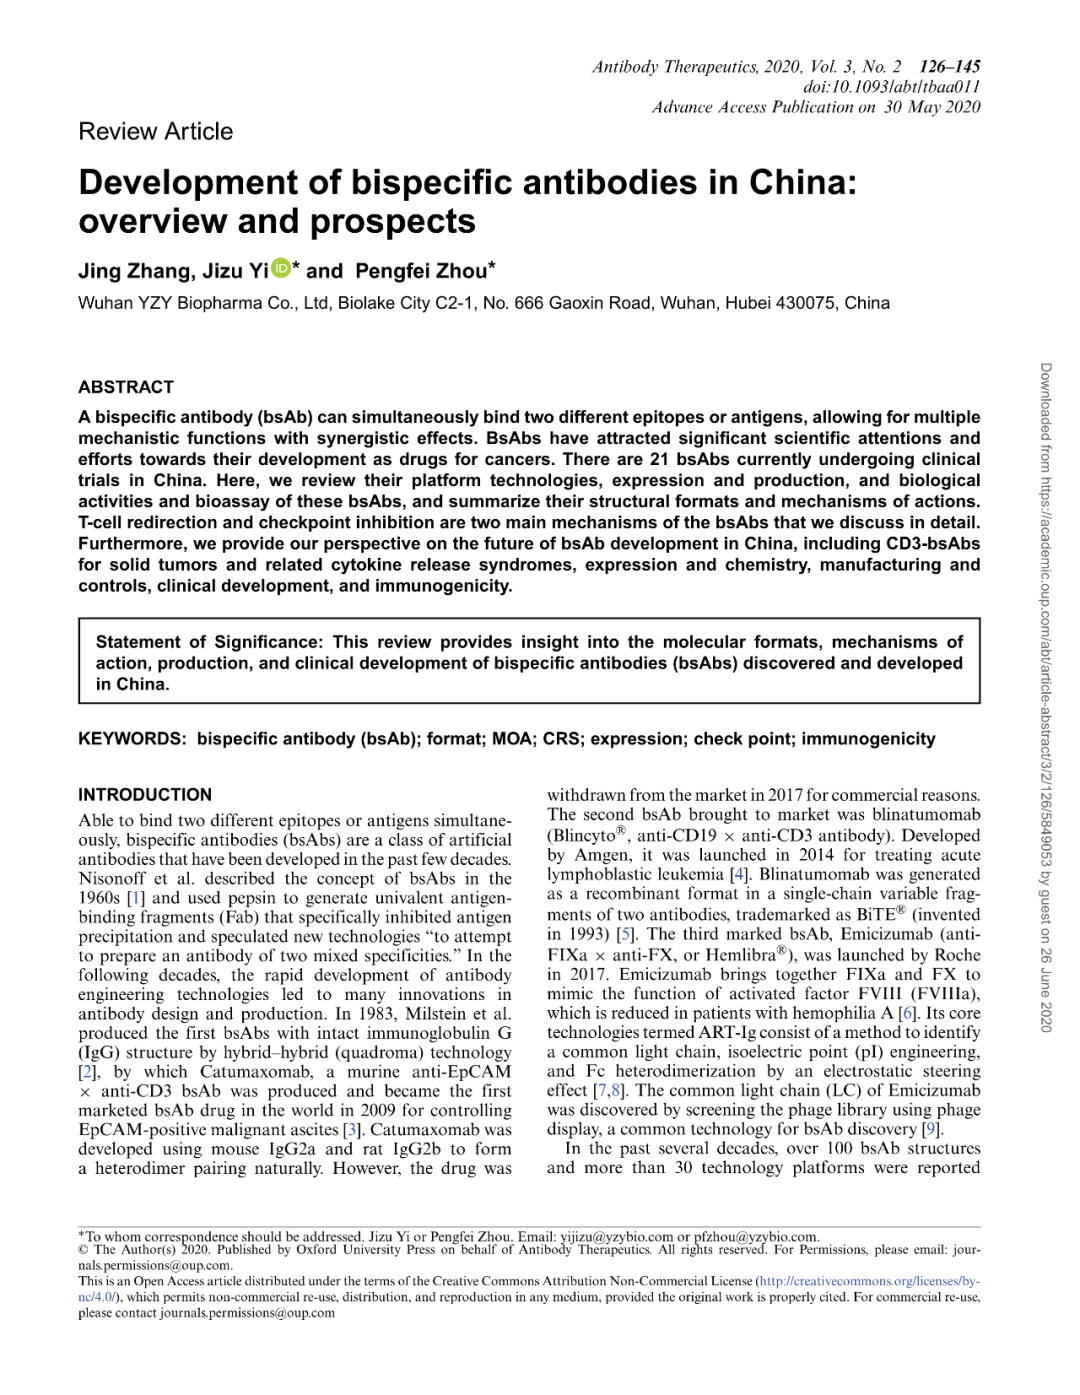 中国双特异性抗体的开发：概况与<font color="red">展望</font>